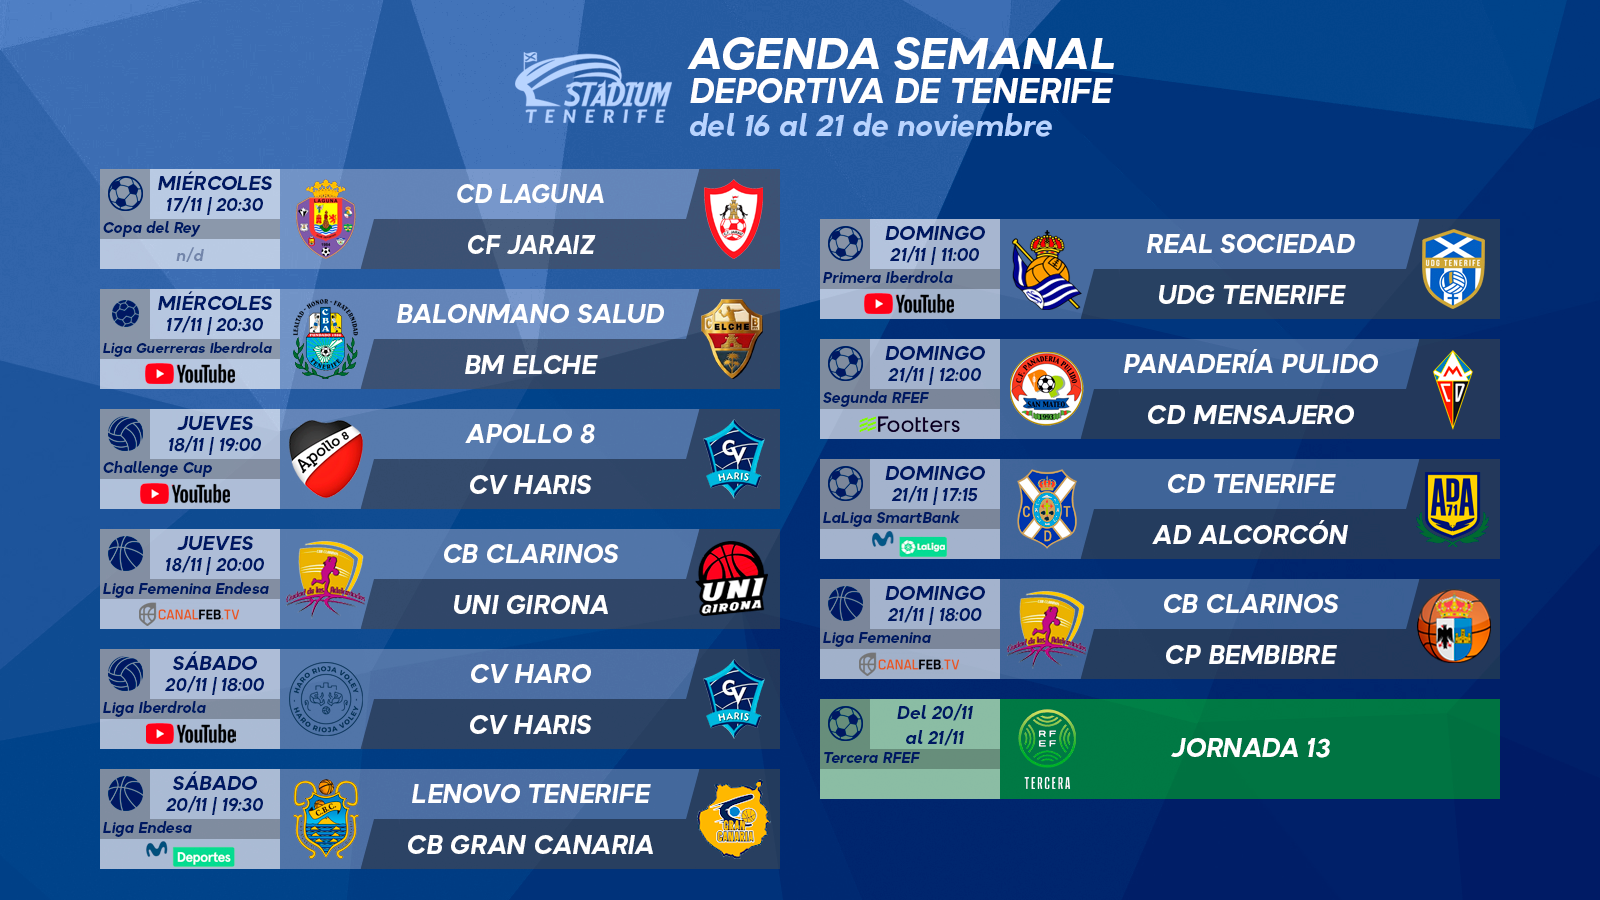 Agenda Semanal Deportiva de Tenerife (16 al 21 de noviembre)